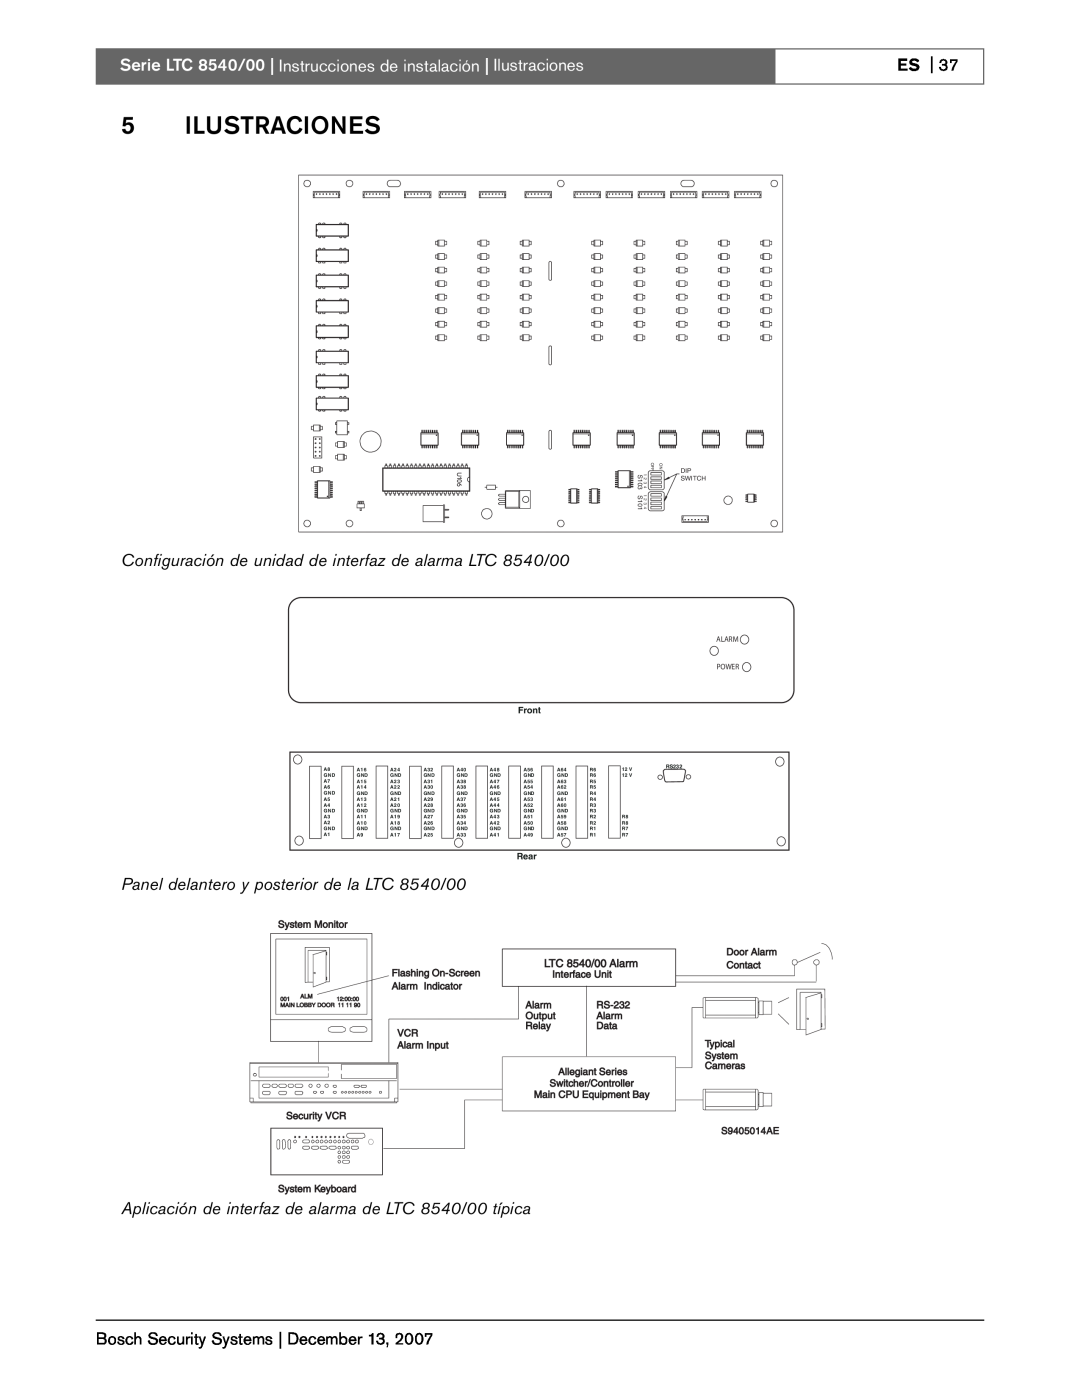 Bosch Appliances LTC 8540/00 instruction manual 5ILUSTRACIONES, Es 